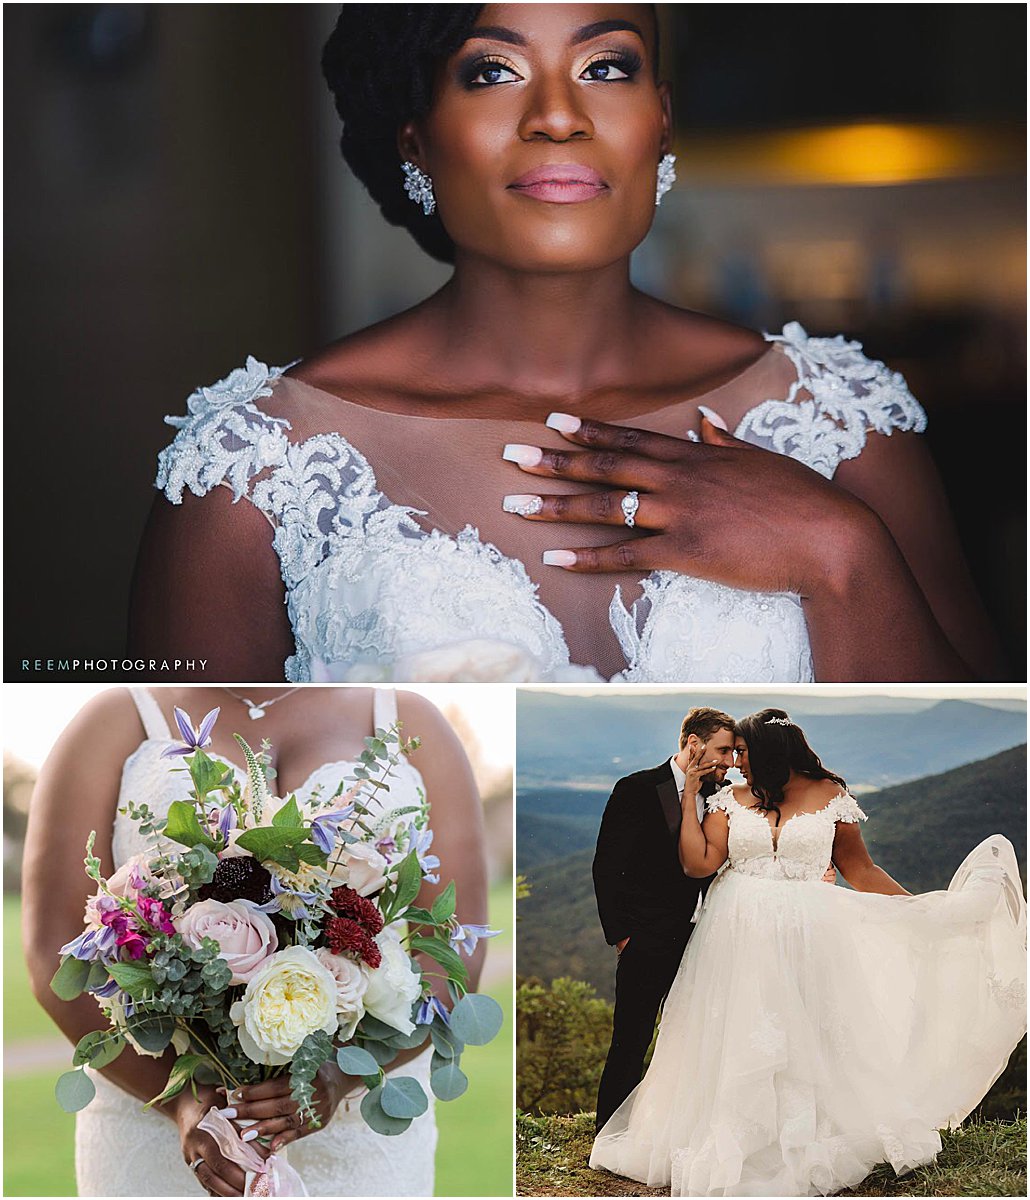 Black-Owned Wedding Businesses | Palm Beach, FL | Married in Palm Beach | www.marriedinpalmbeach.com | Just Glam Events